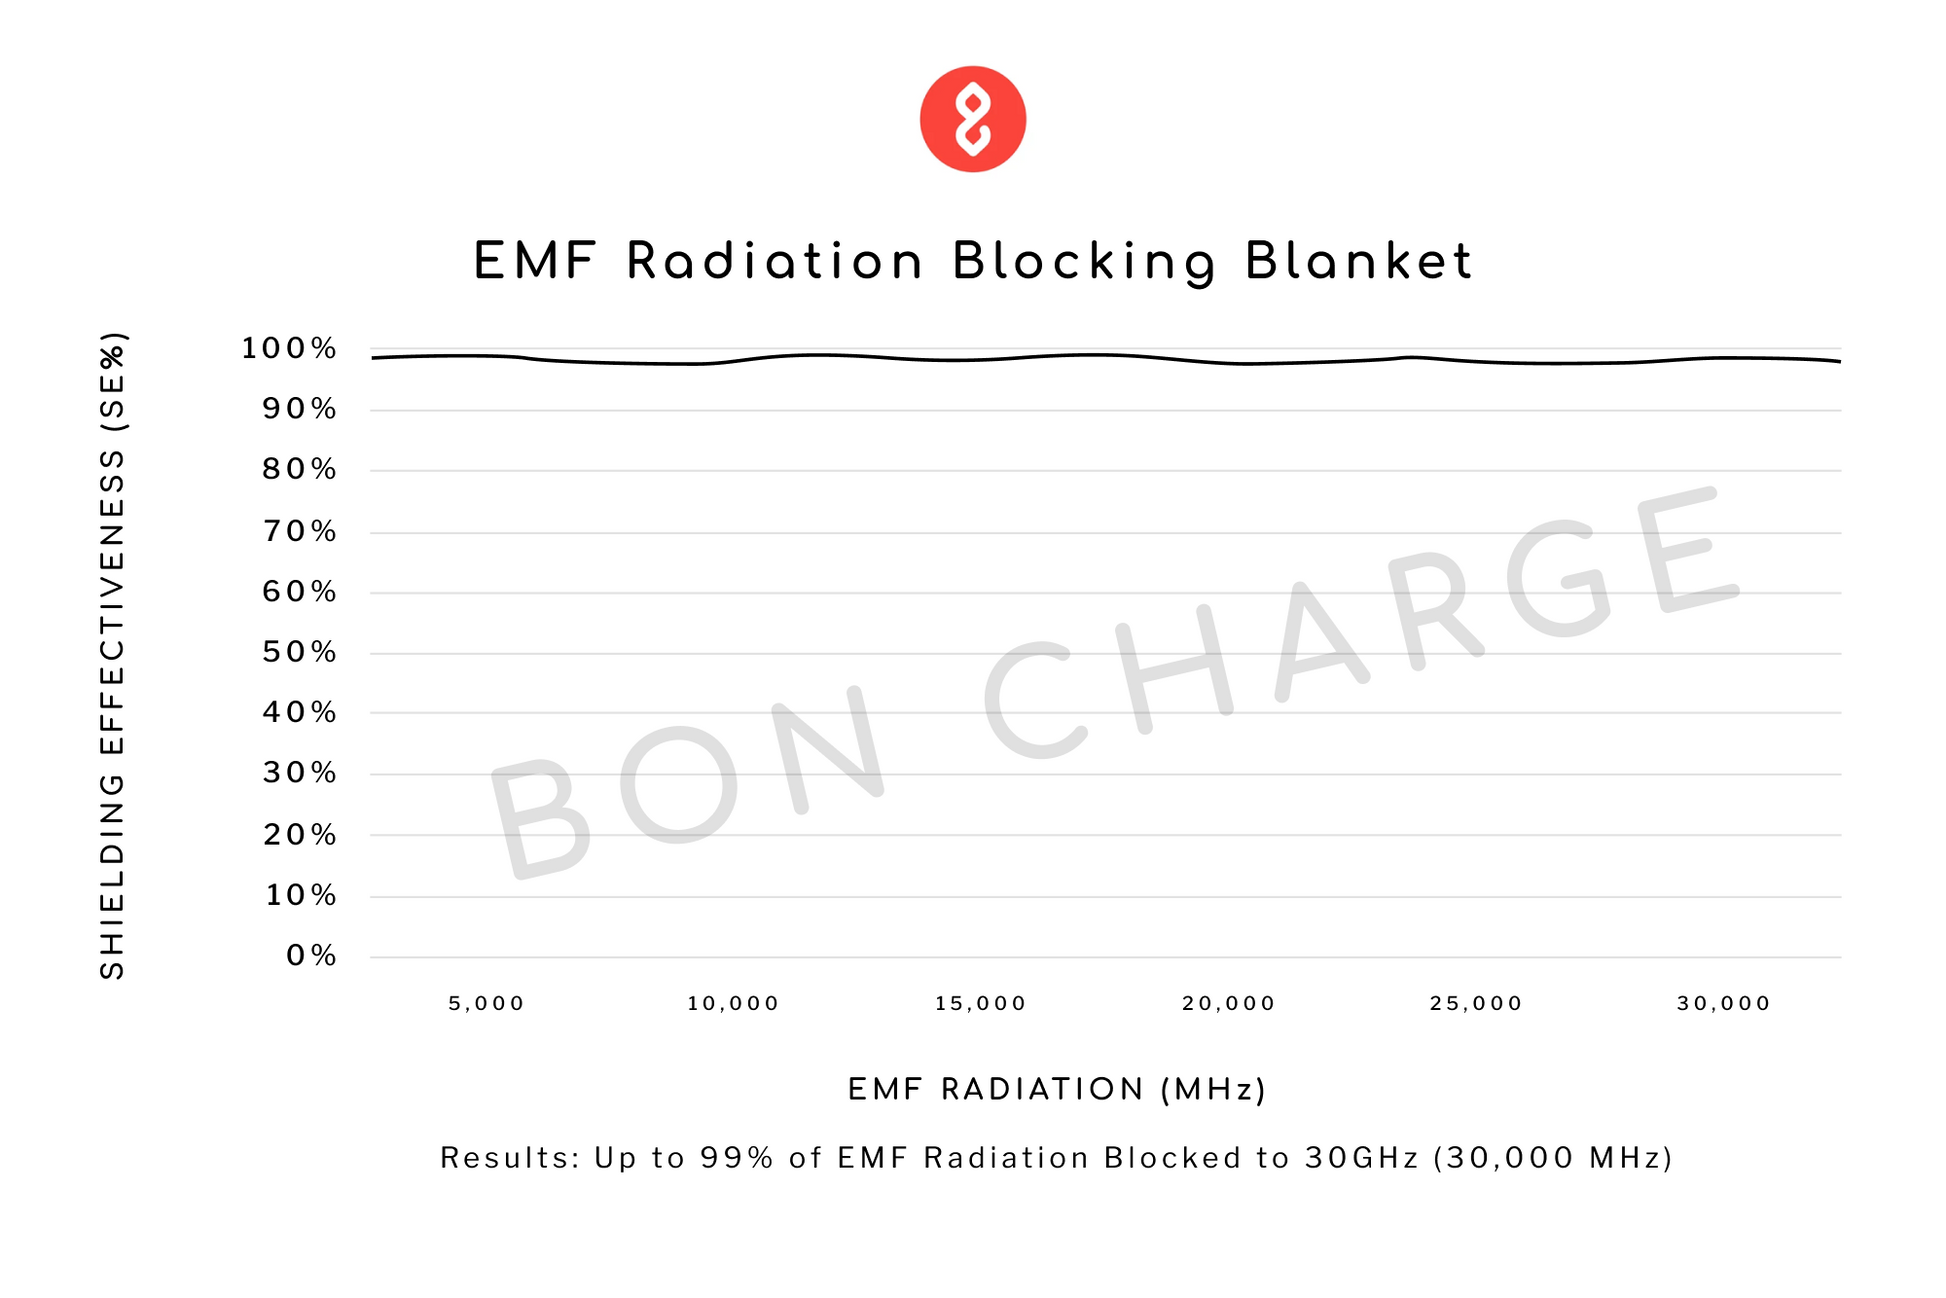 Mission Darkness TitanRF Radiation Shielding Baby Blanket (Blue) - 30 x  40 (76cm x 101cm) Ultra-Soft Minky Dot Design with EMF Radiation Protection